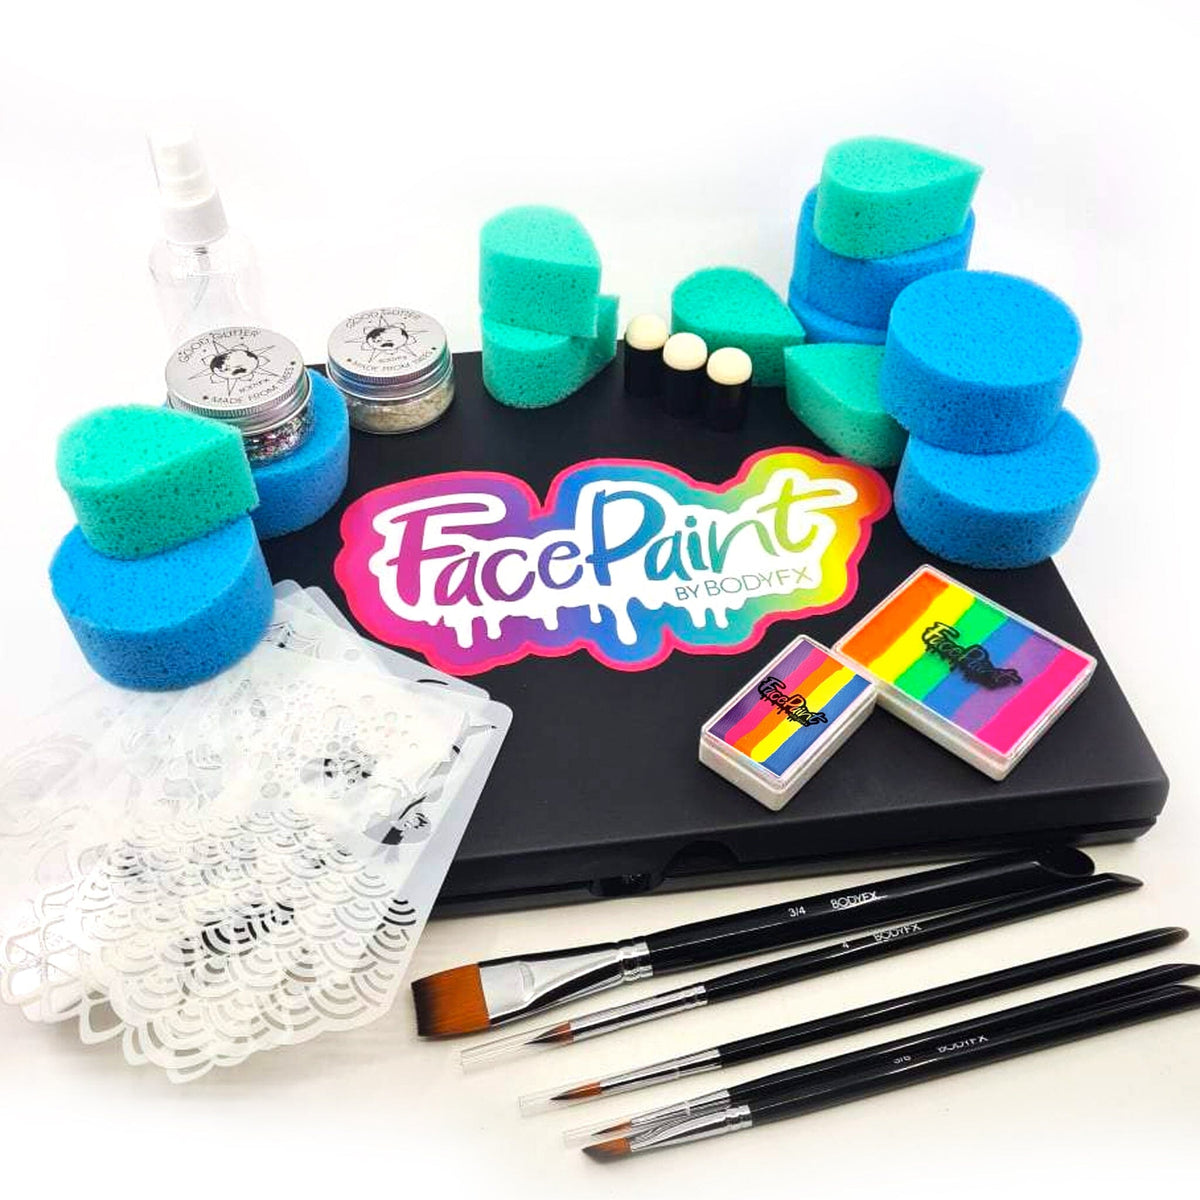 Face Paint Professional Pack